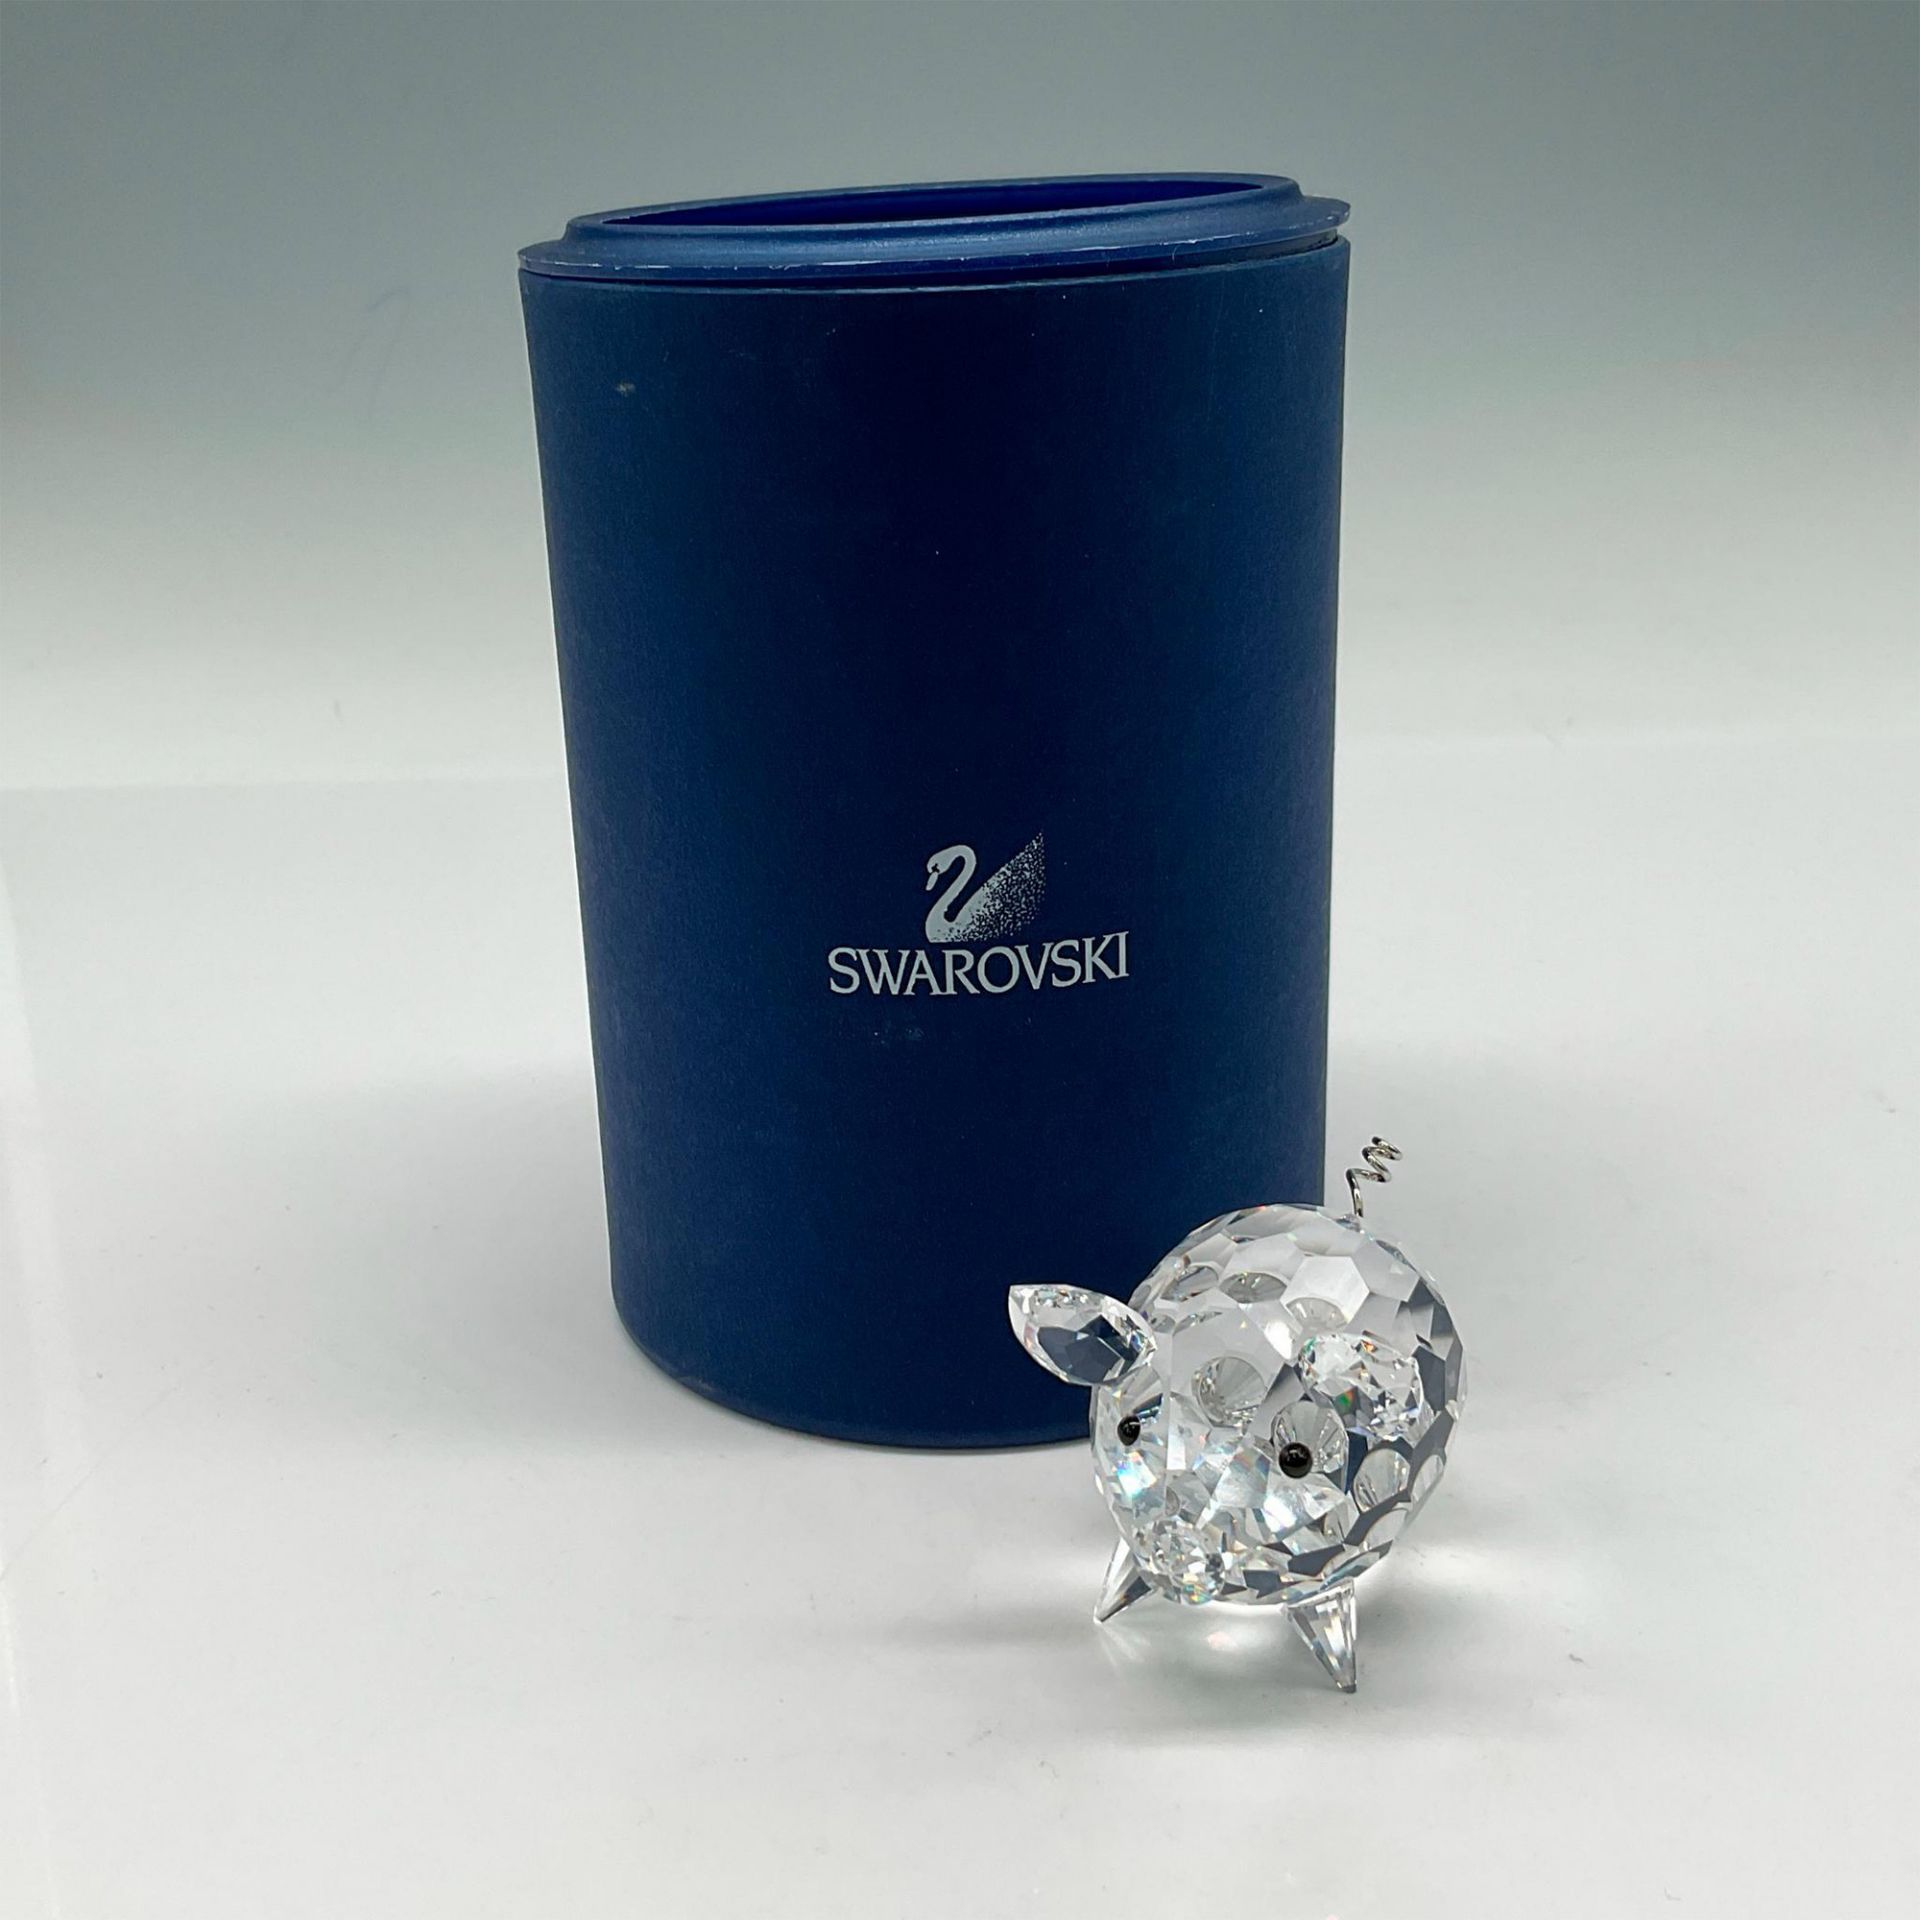 Swarovski Silver Crystal Figurine, Medium Pig - Image 4 of 4